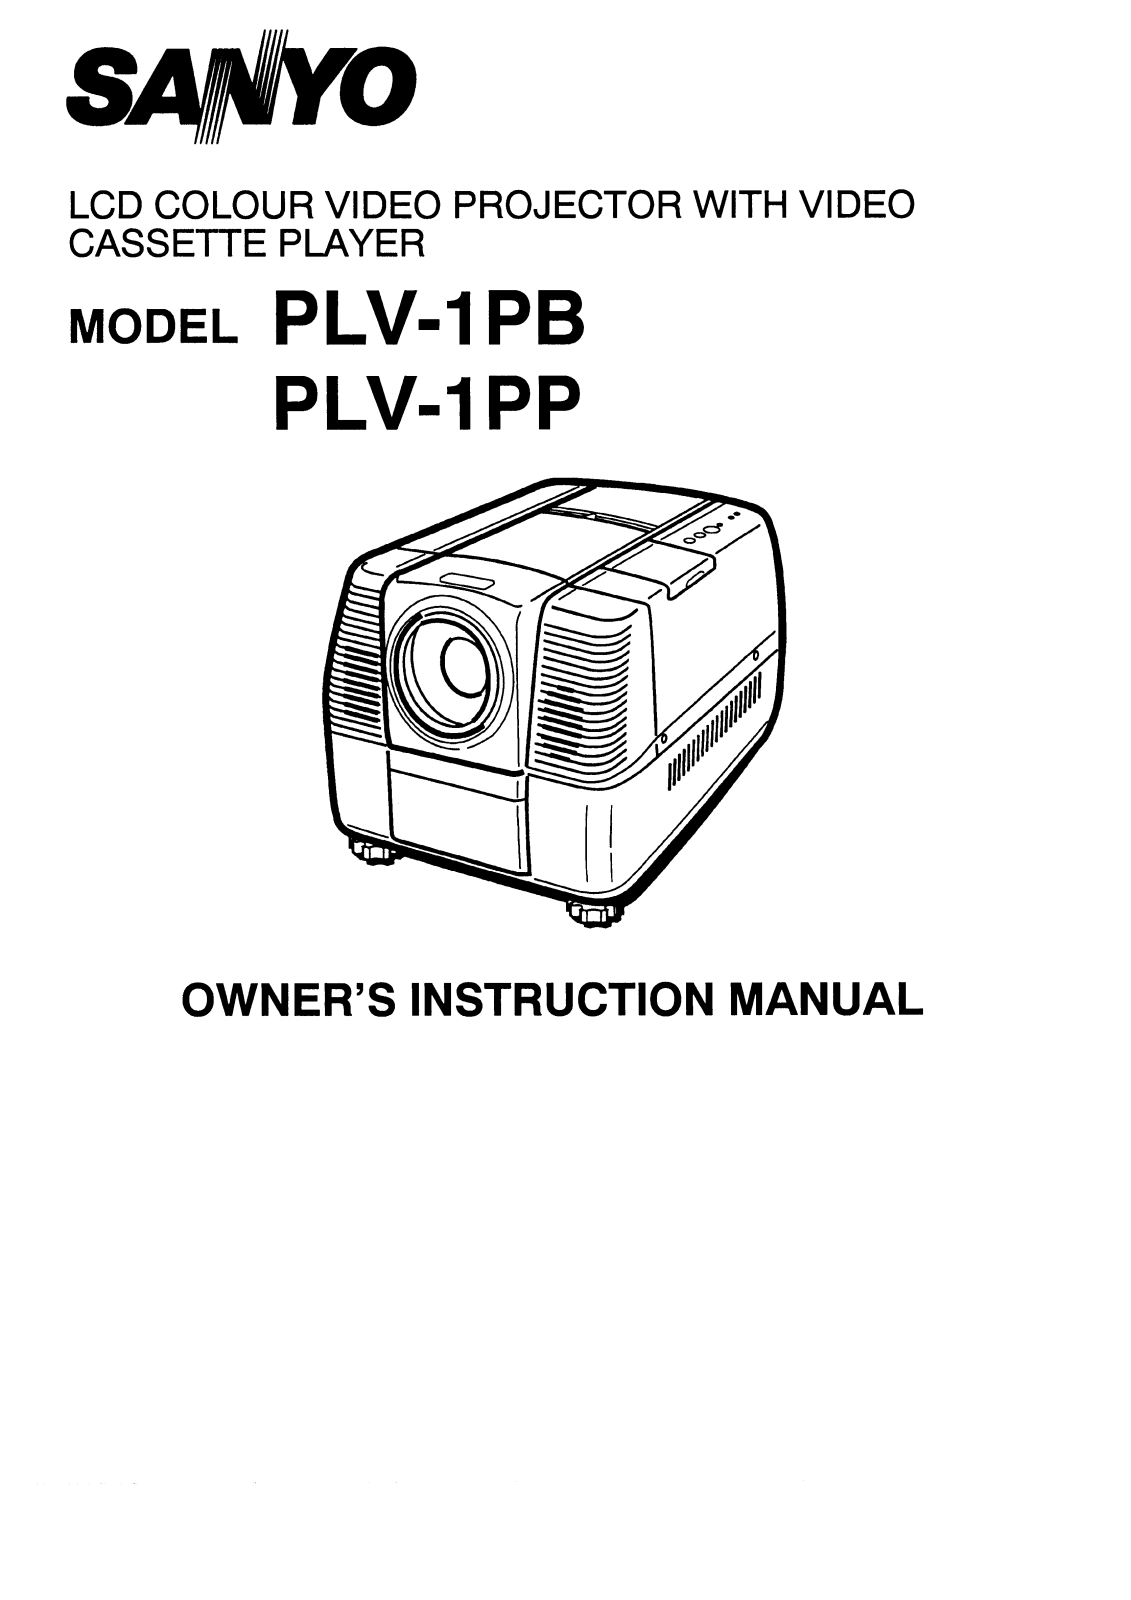 Sanyo PLV-1PB, PLV-1PP Instruction Manual